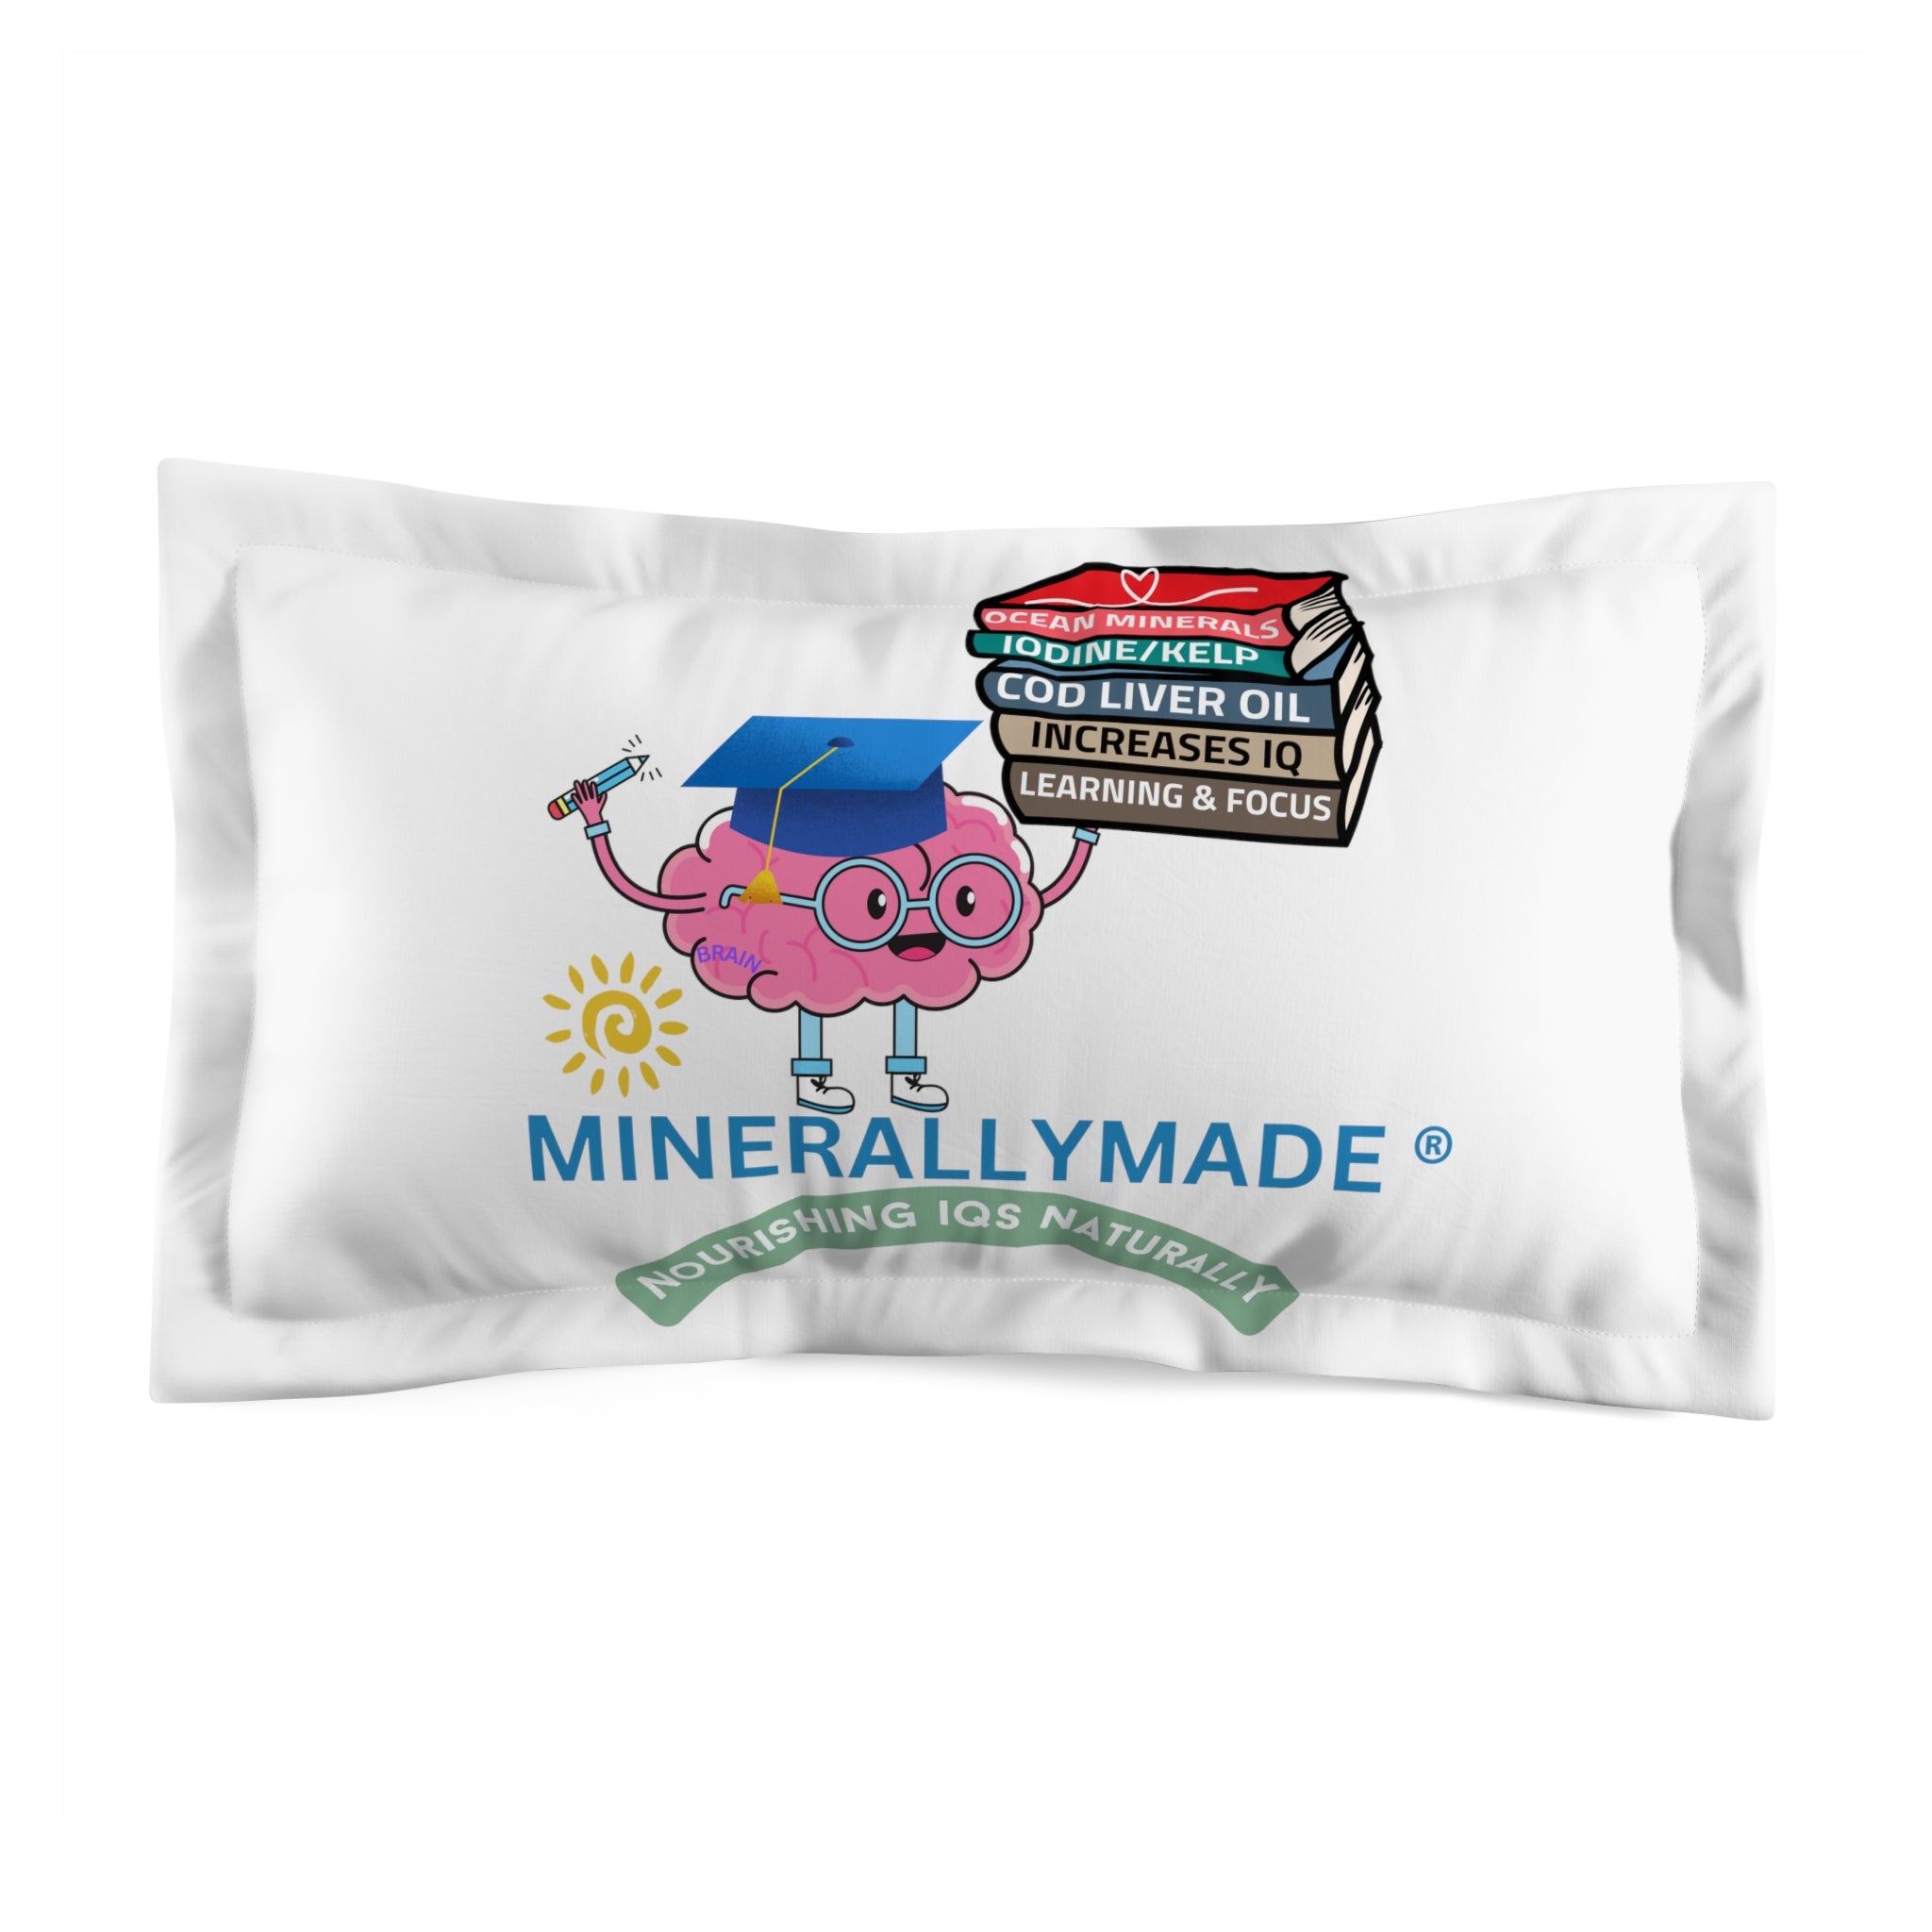 Minerallymade | Nourishing IQs Naturally | Microfiber Pillow Sham